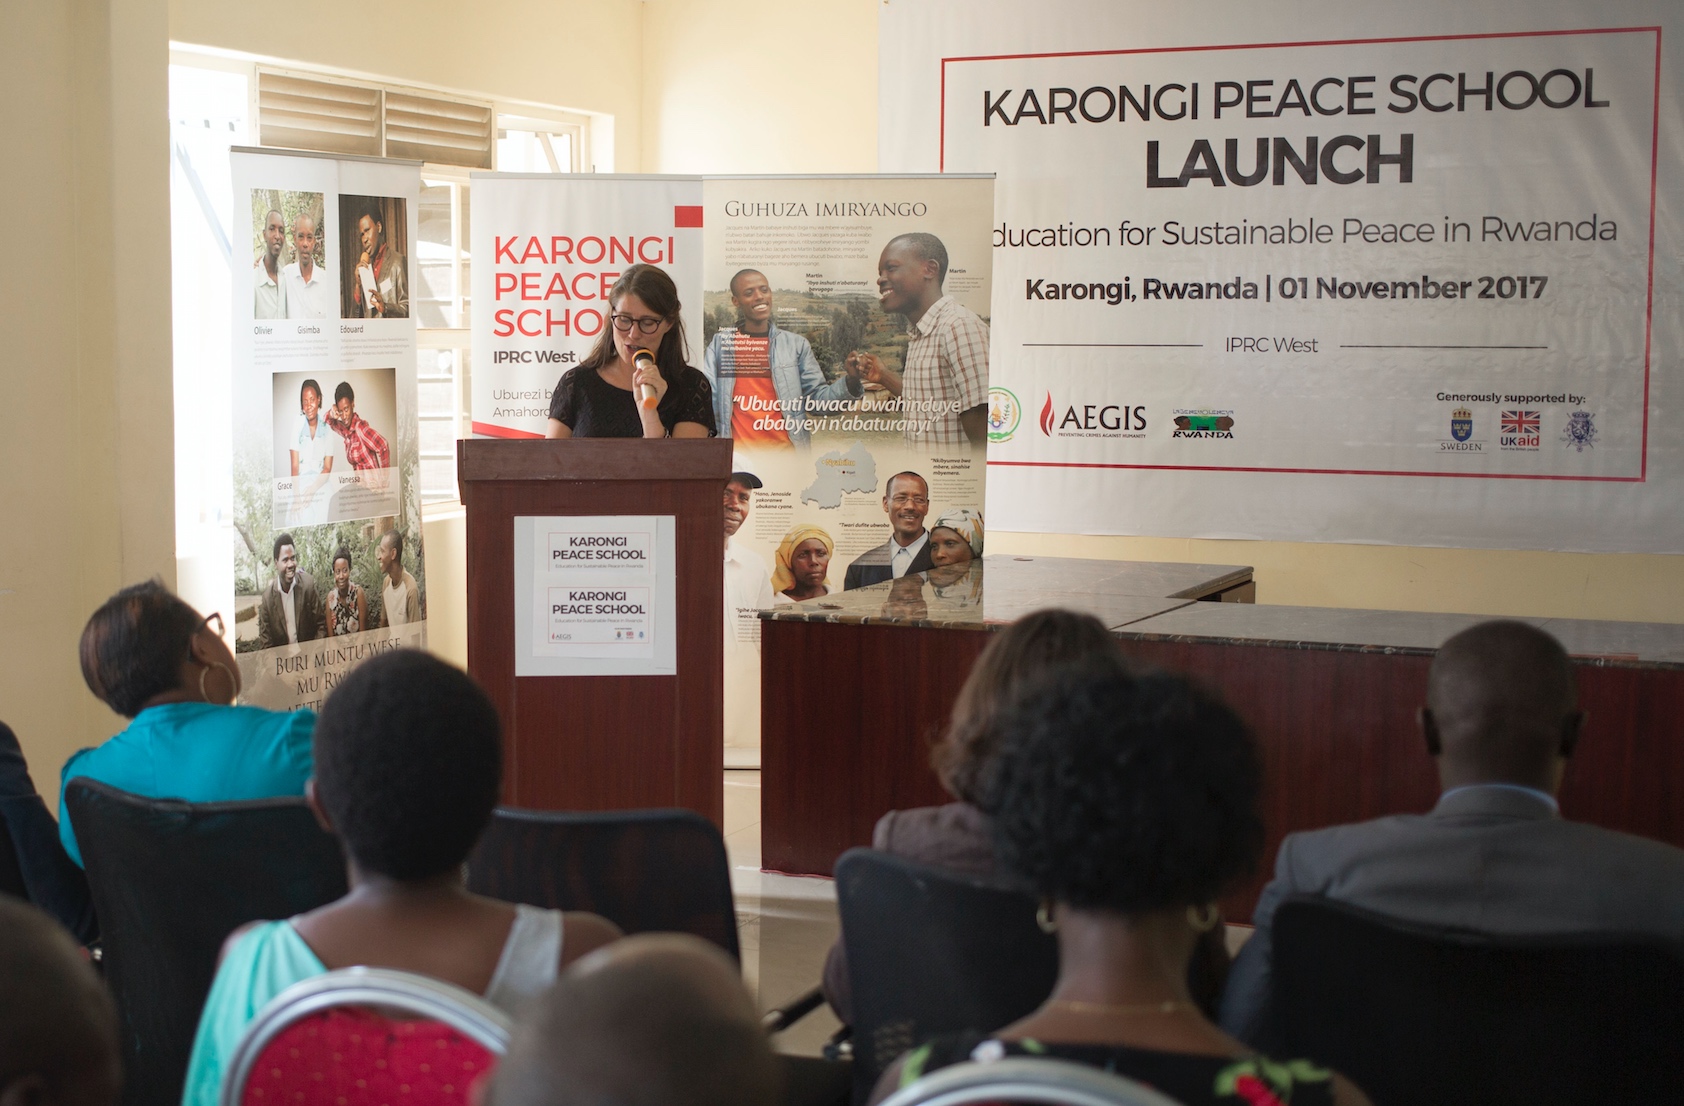 Swedish Ambassador to Rwanda, the Honorable Jenny Ohlsson, speaks at the launch of the Karongi Peace School